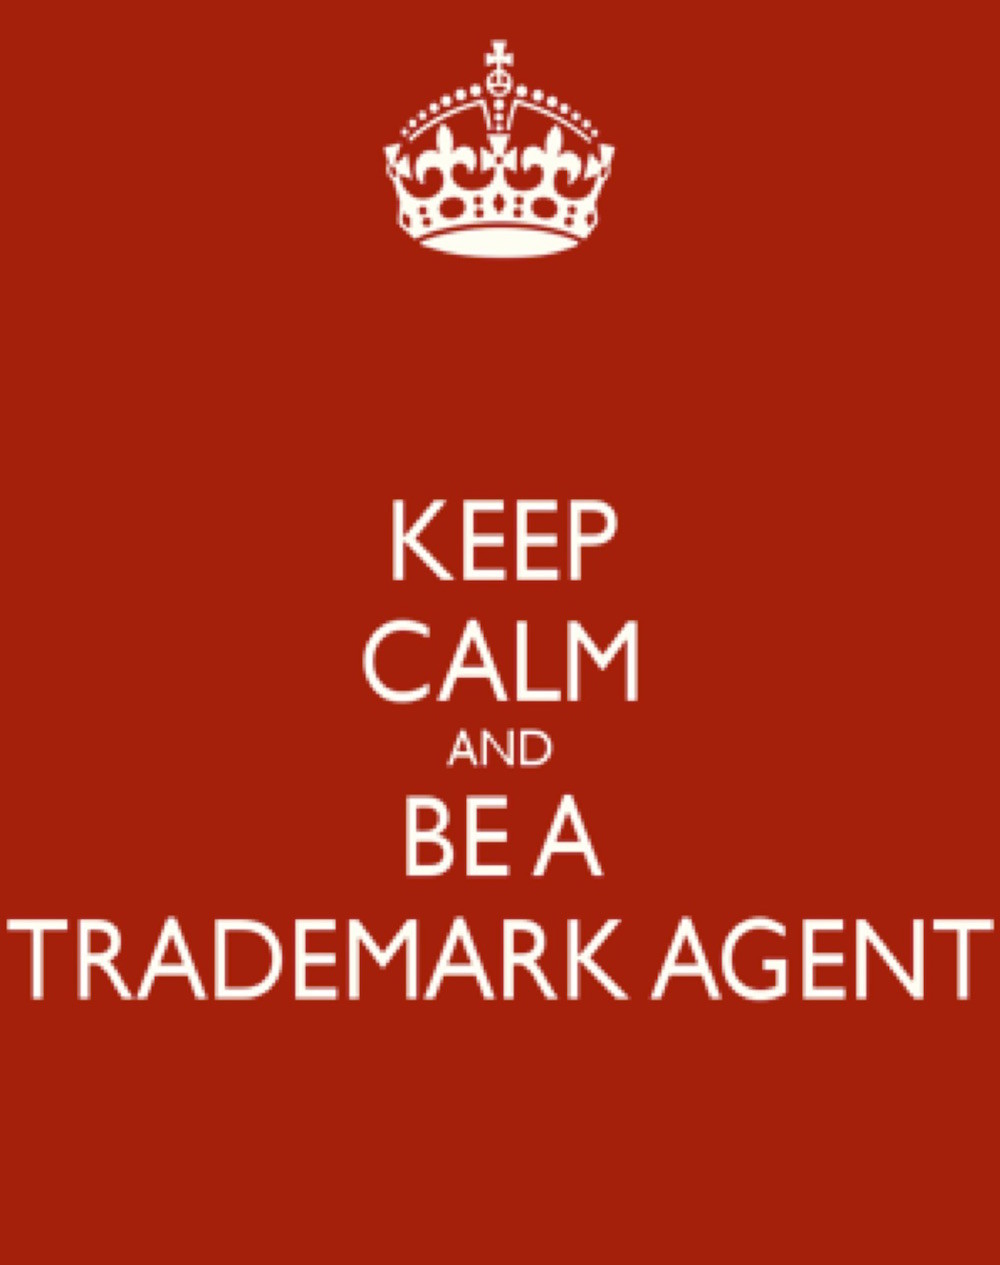 trademark agent